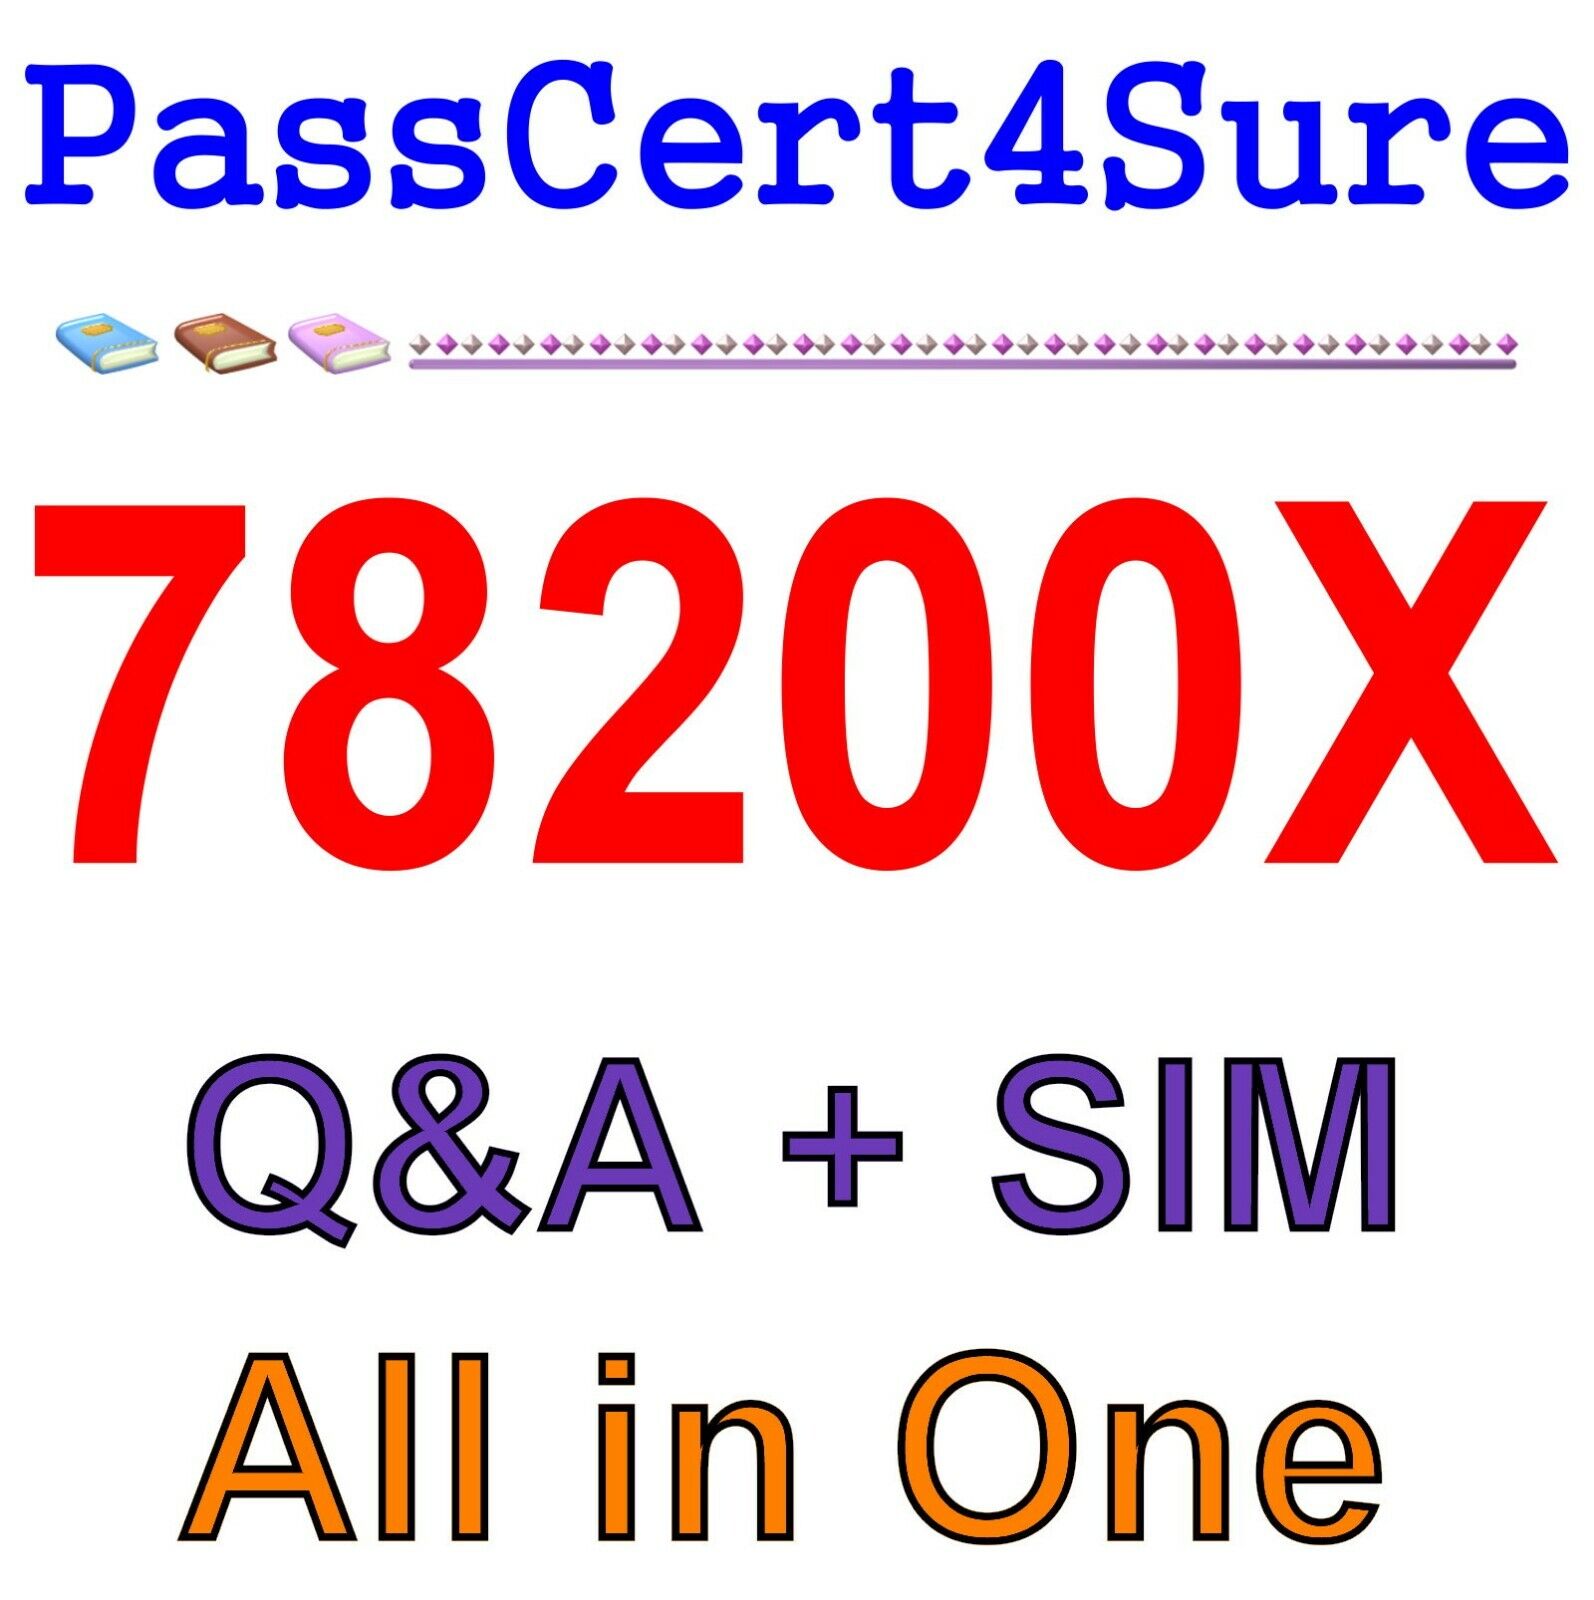 Avaya IP Office Platform Configuration and Maintenance 78200X Exam Q&A+SIM